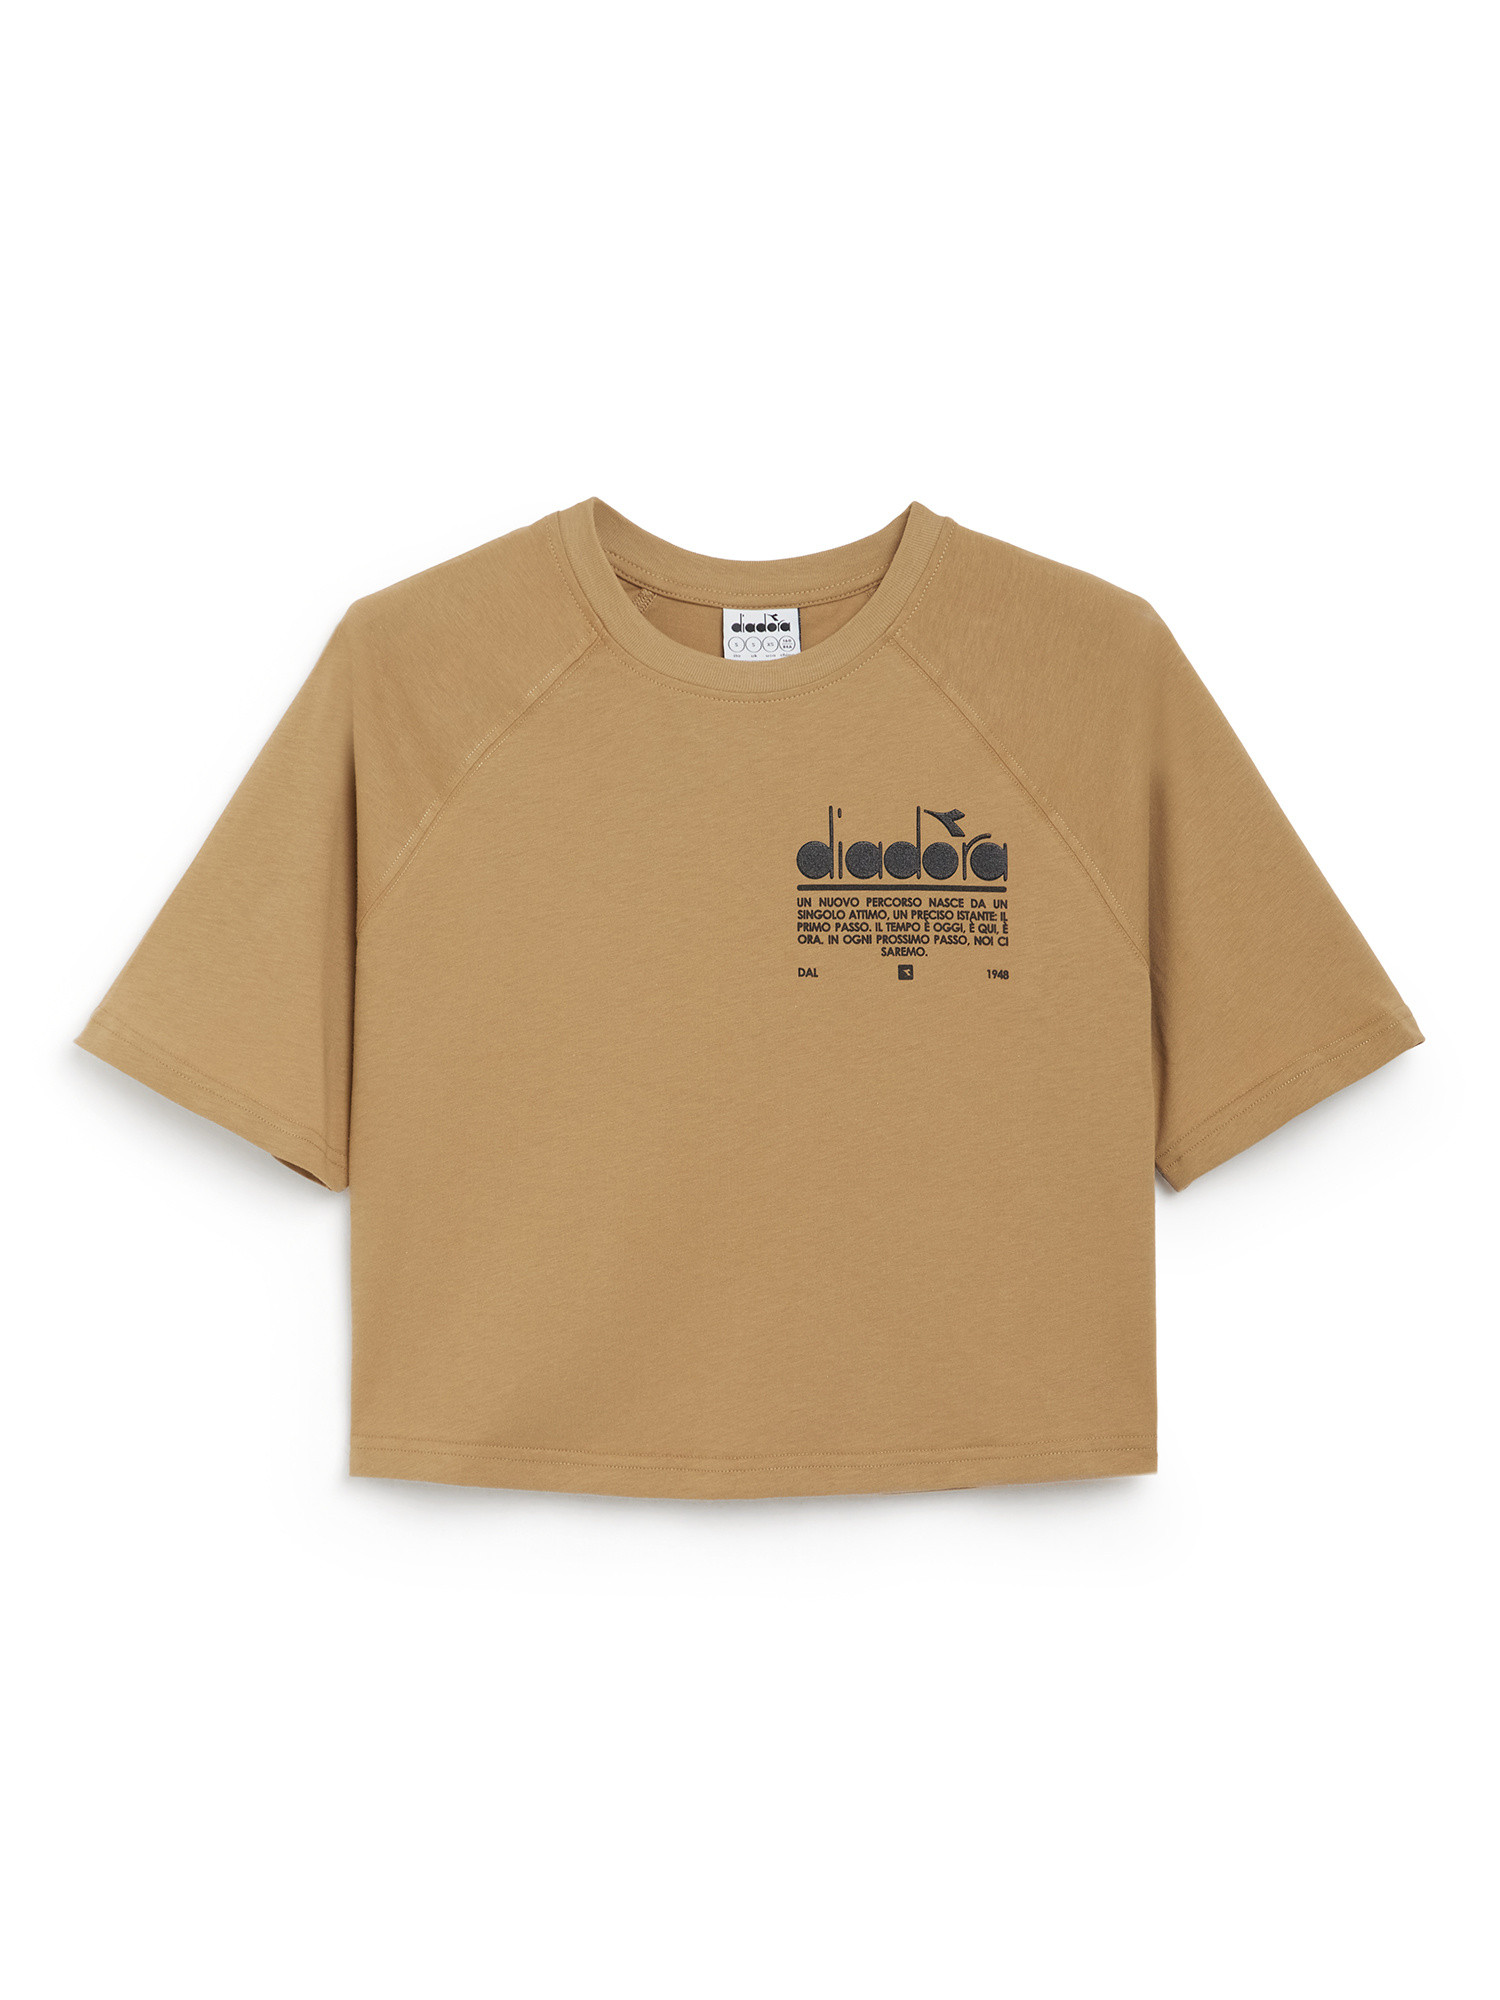 Diadora - Manifesto cotton T-shirt, Beige, large image number 0